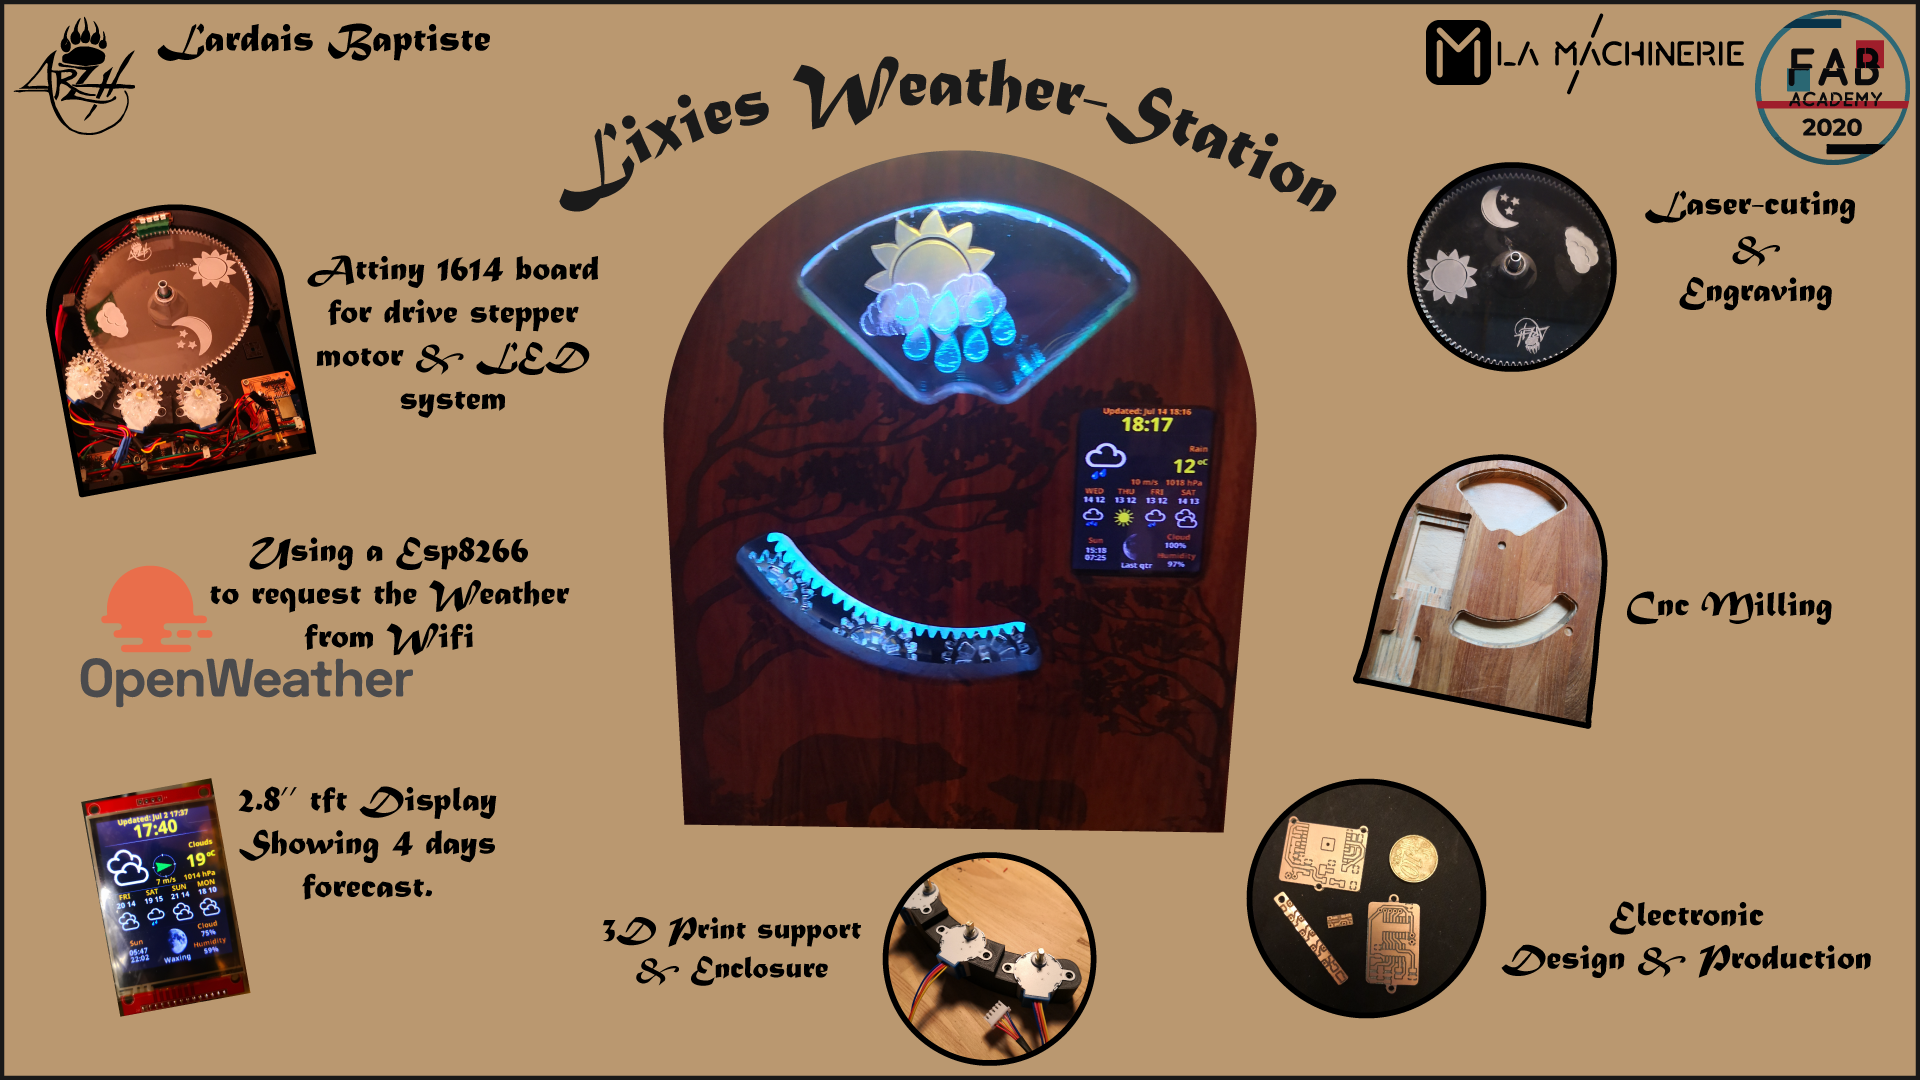 Lixies Weather-Station, by Baptiste Lardais